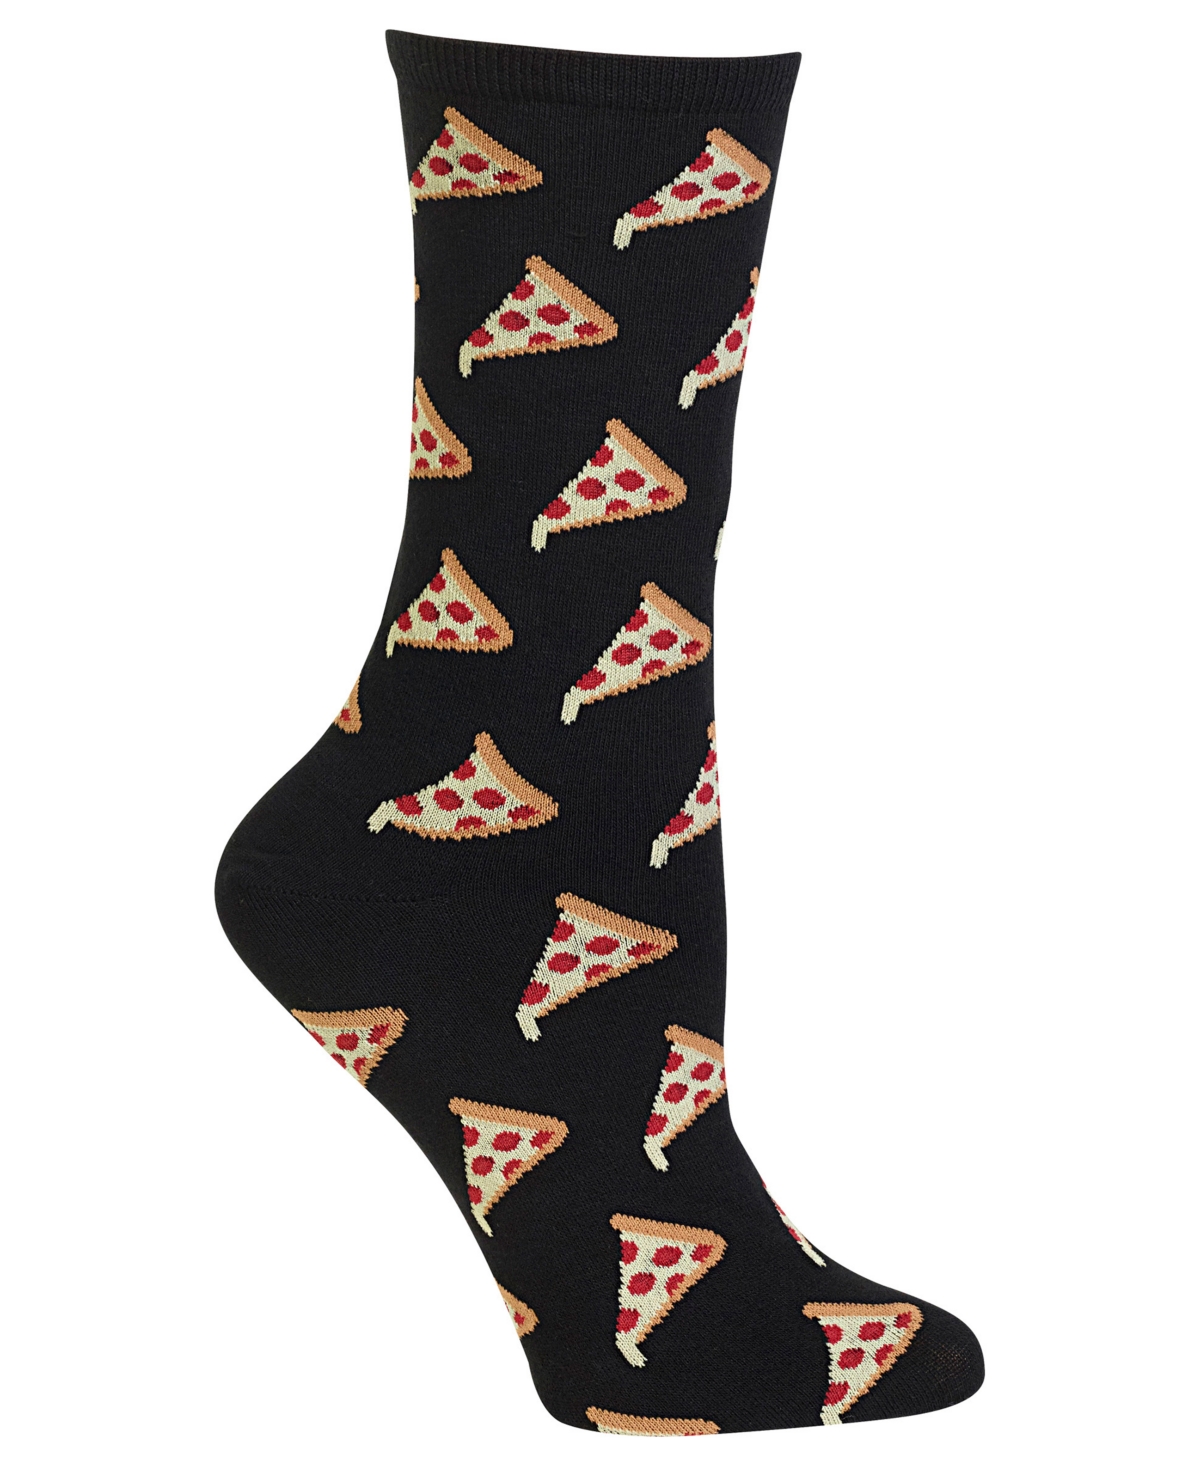 Women's Pizza Fashion Crew Socks - Black